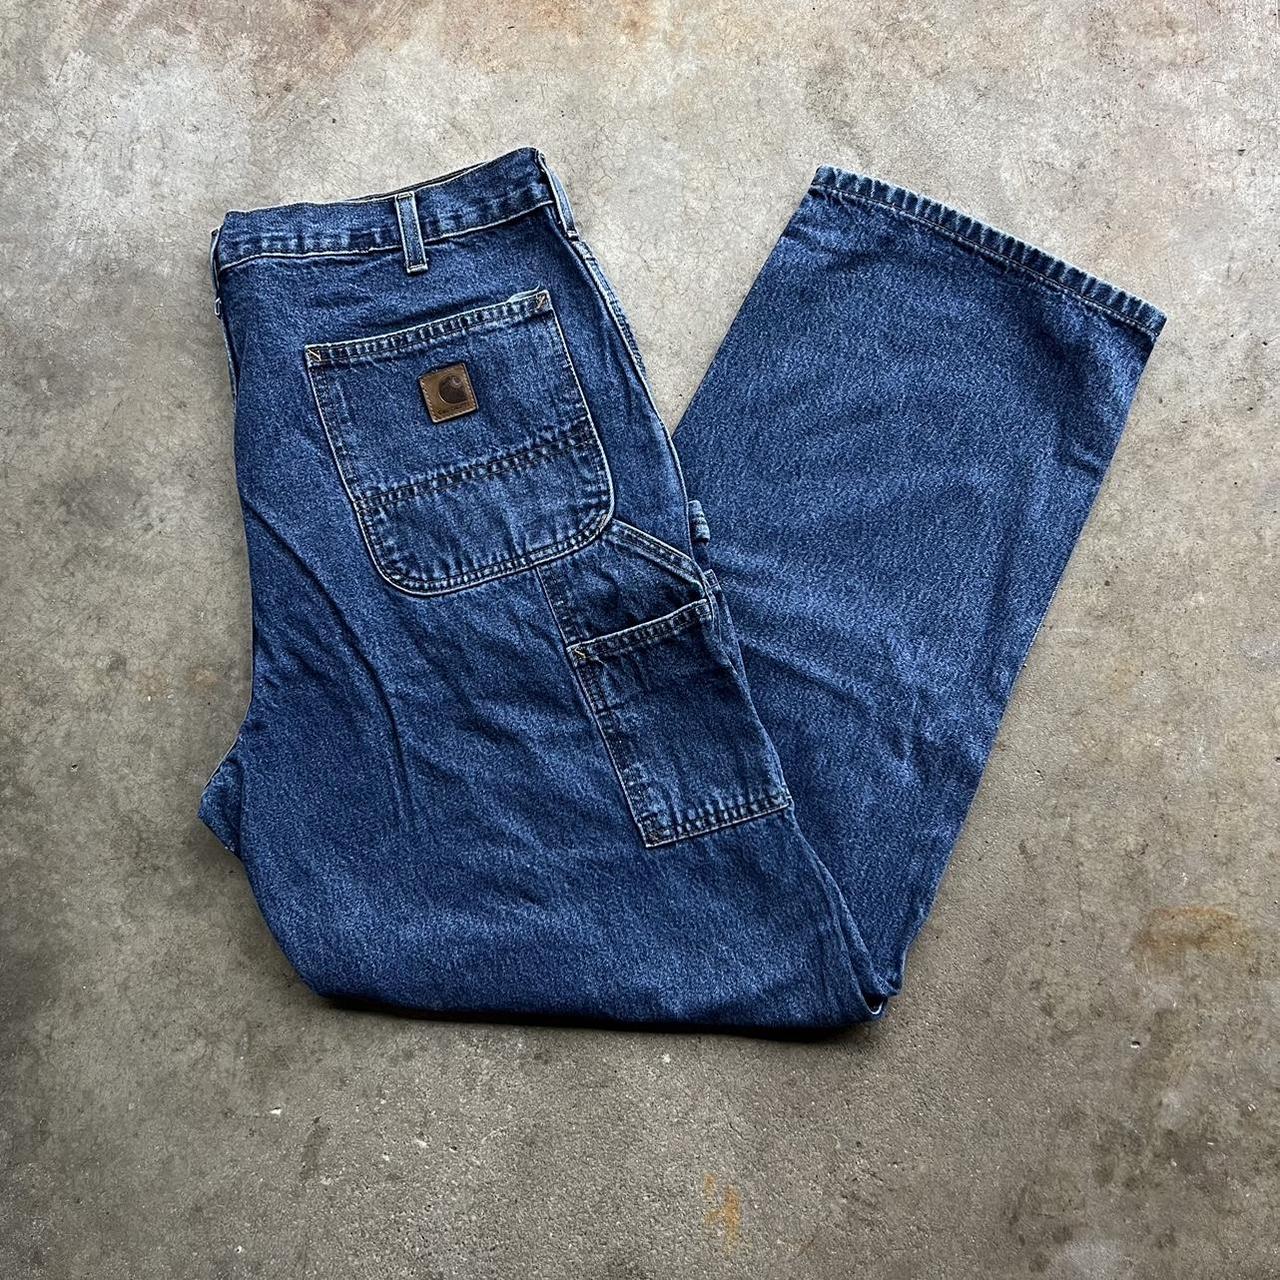 Vintage Carhartt Carpenter Jeans amazing essential... - Depop